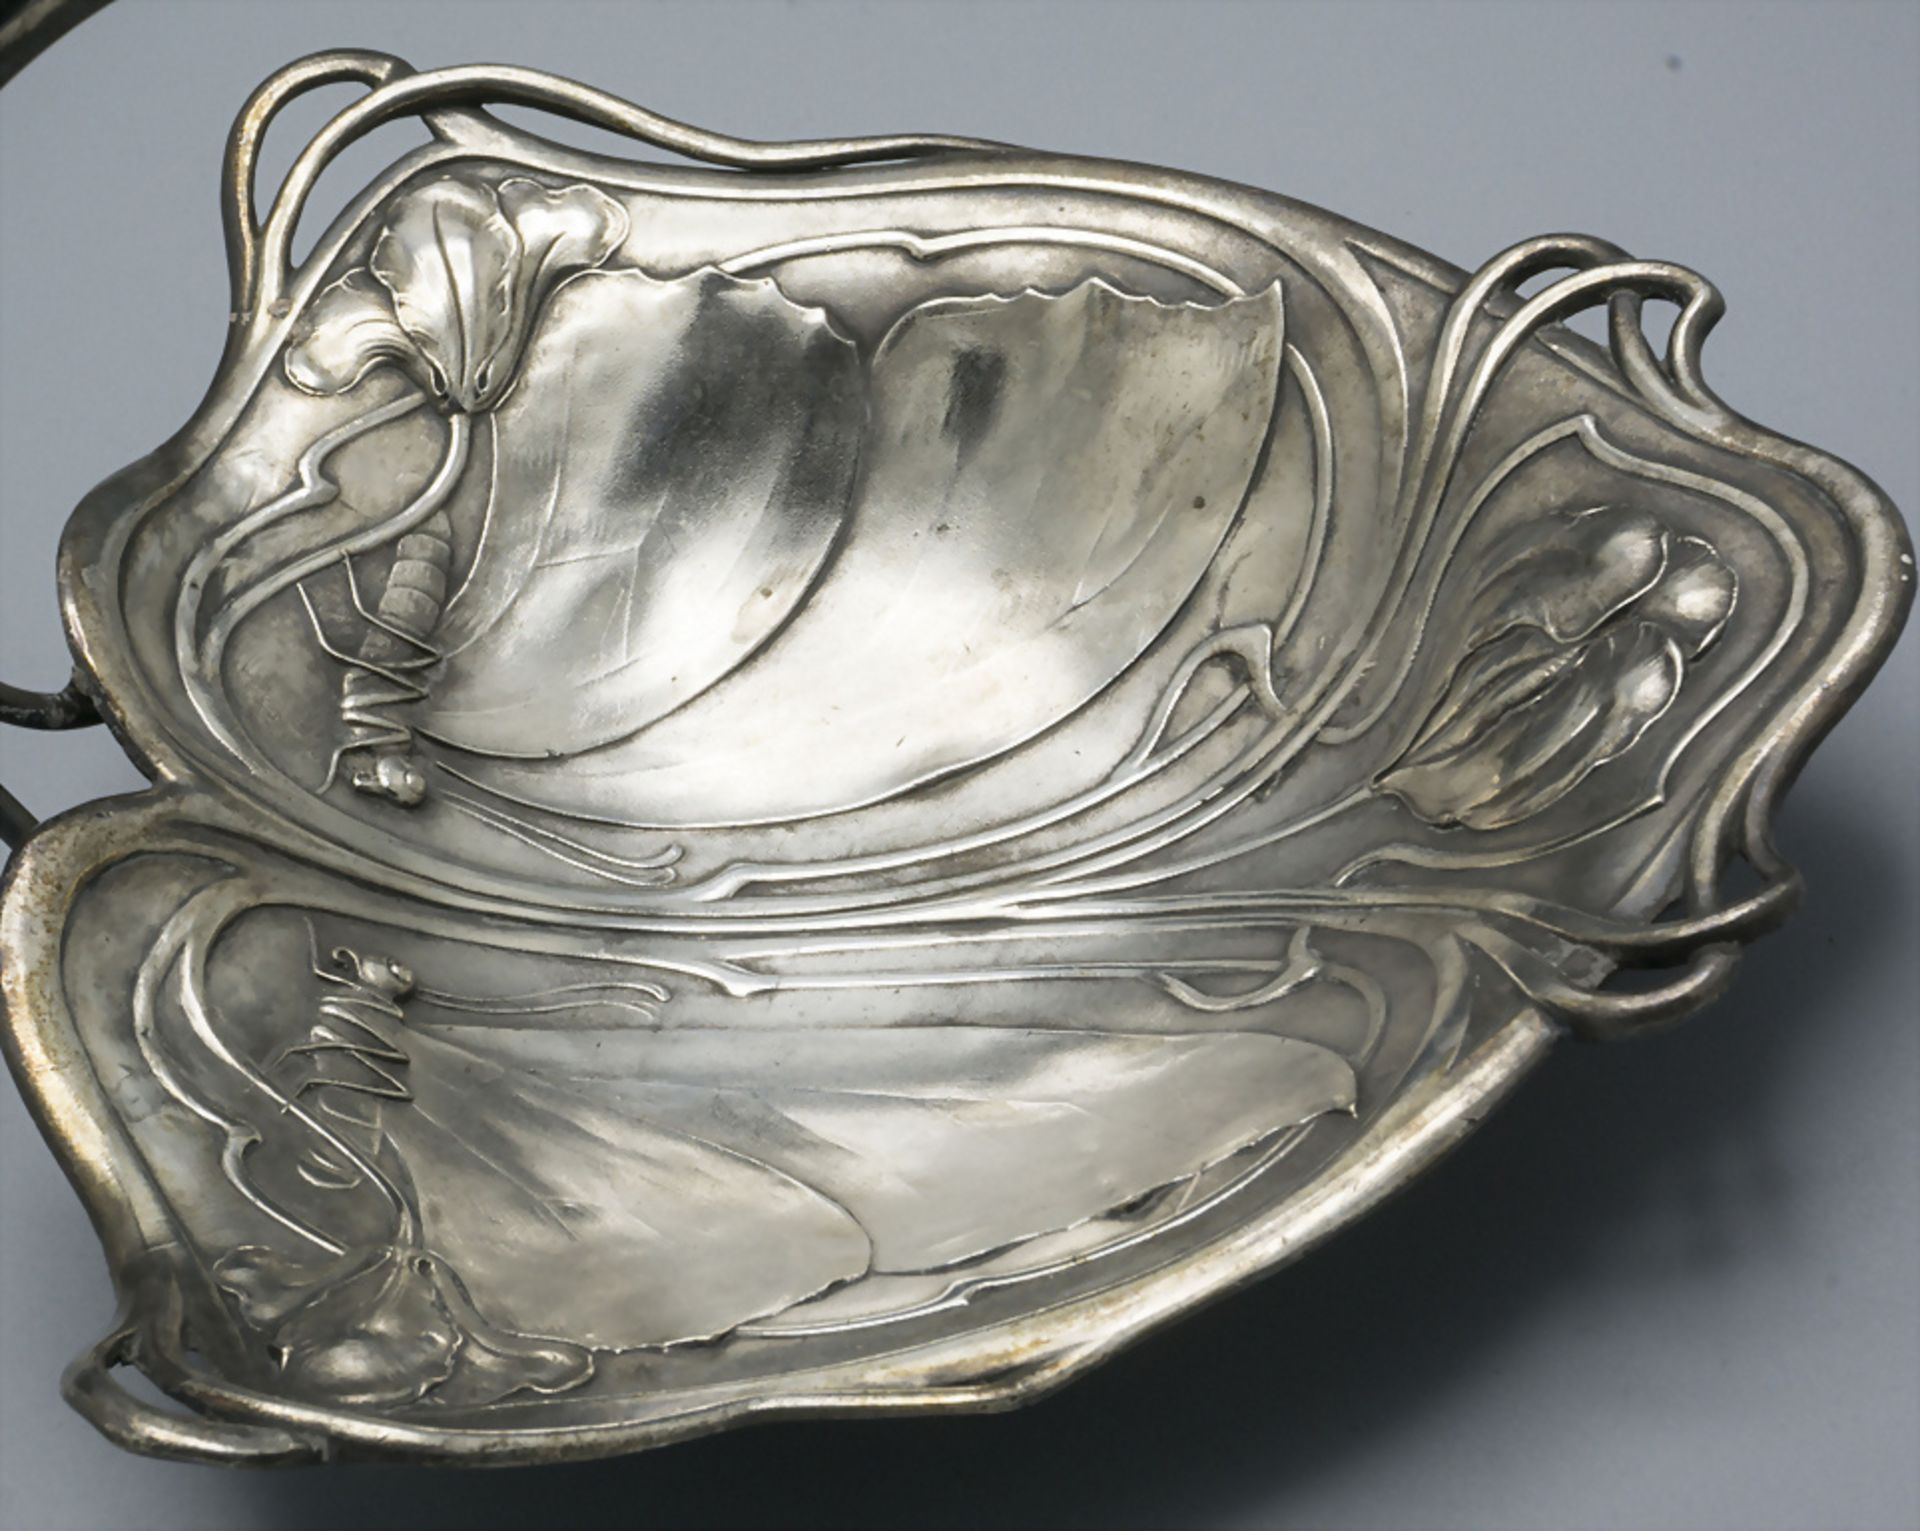 Jugendstil Zuckerschale 'Schmetterlinge' / An Art Nouveau sugar bowl with butterflies, WMF, ... - Bild 5 aus 6